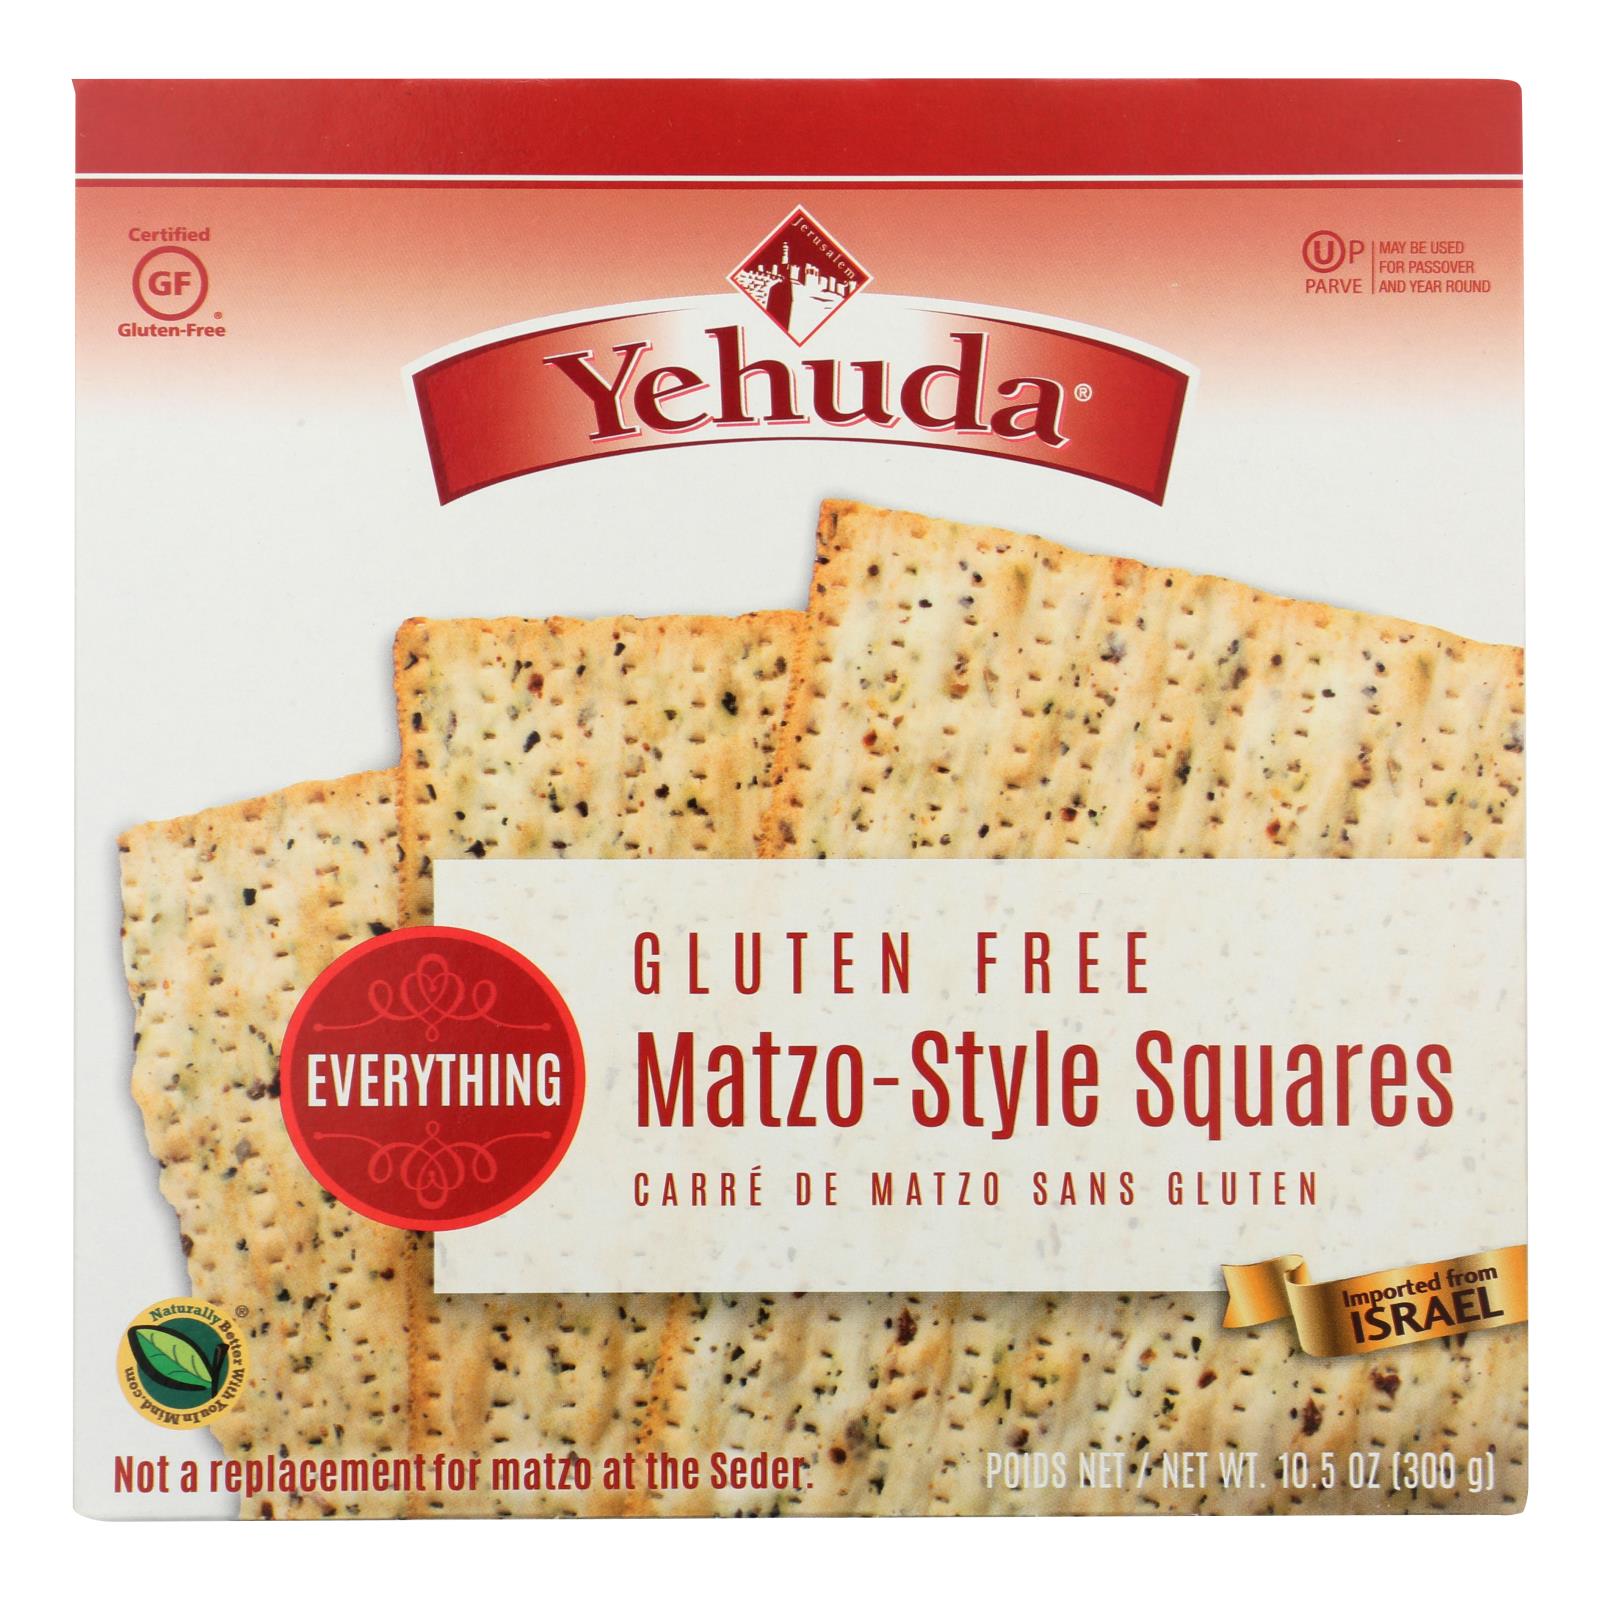 Yehuda® Matzo-Style Squares - 12개 묶음상품 - 10.5 OZ